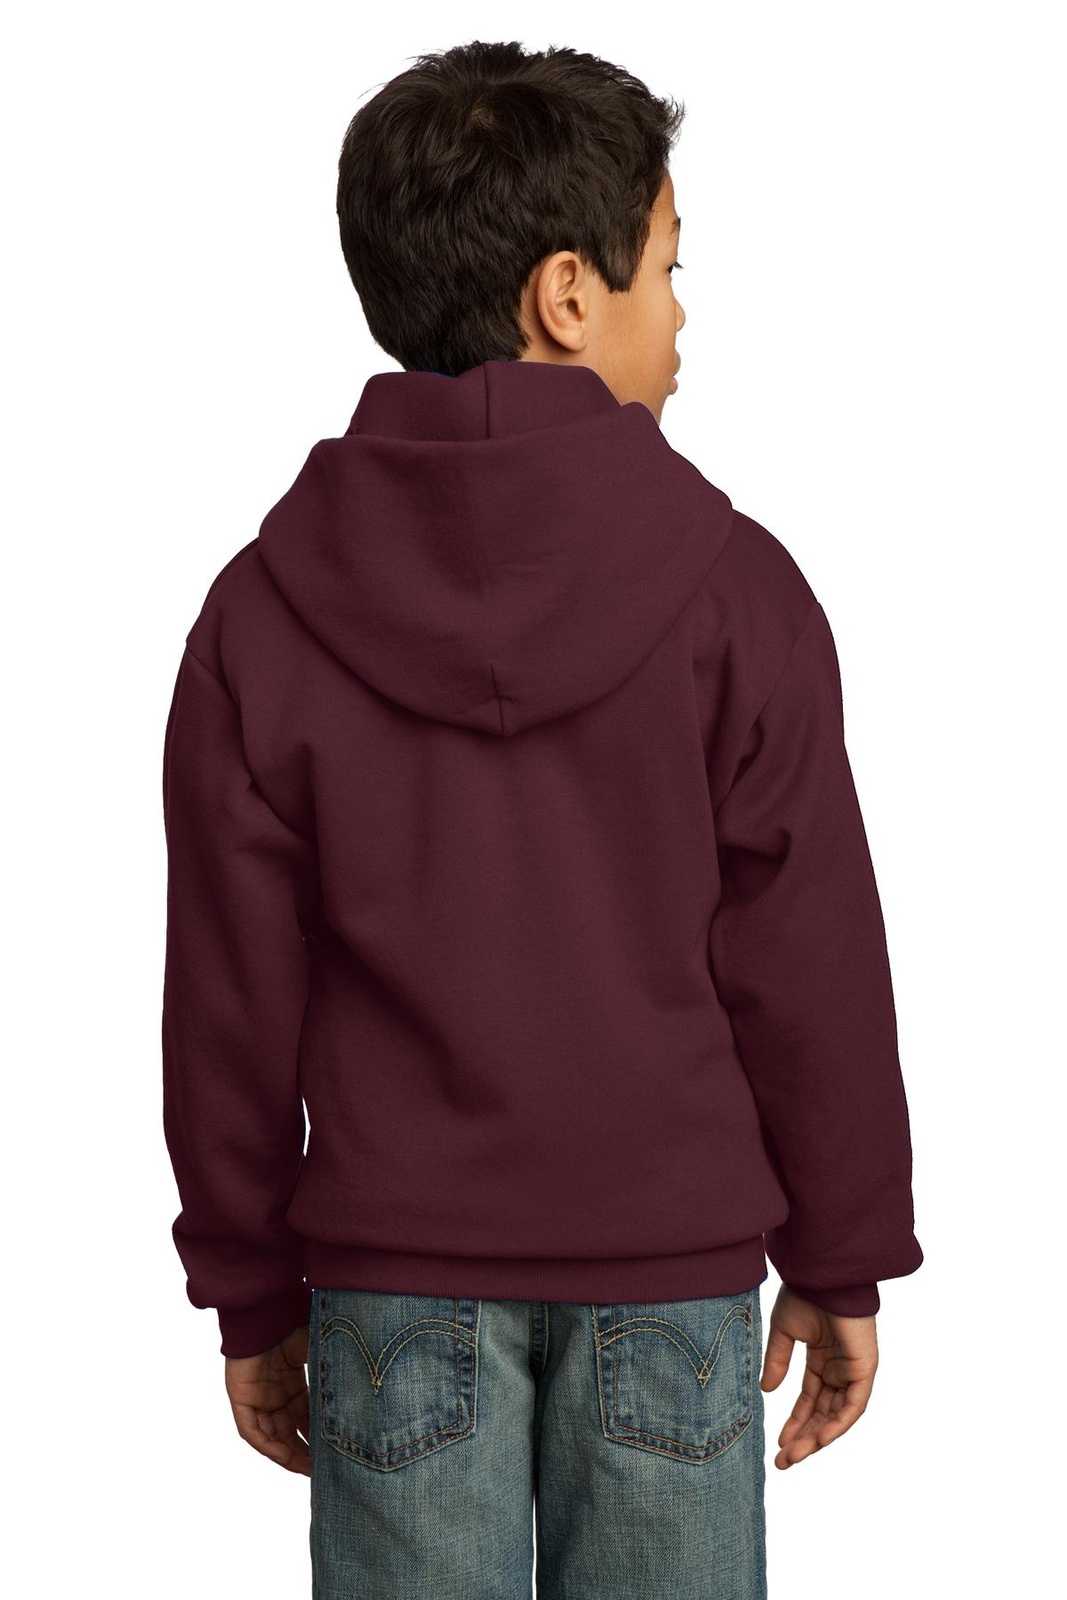 Port & Company PC90YH Youth Core Fleece Pullover Hooded Sweatshirt - Maroon - HIT a Double - 1